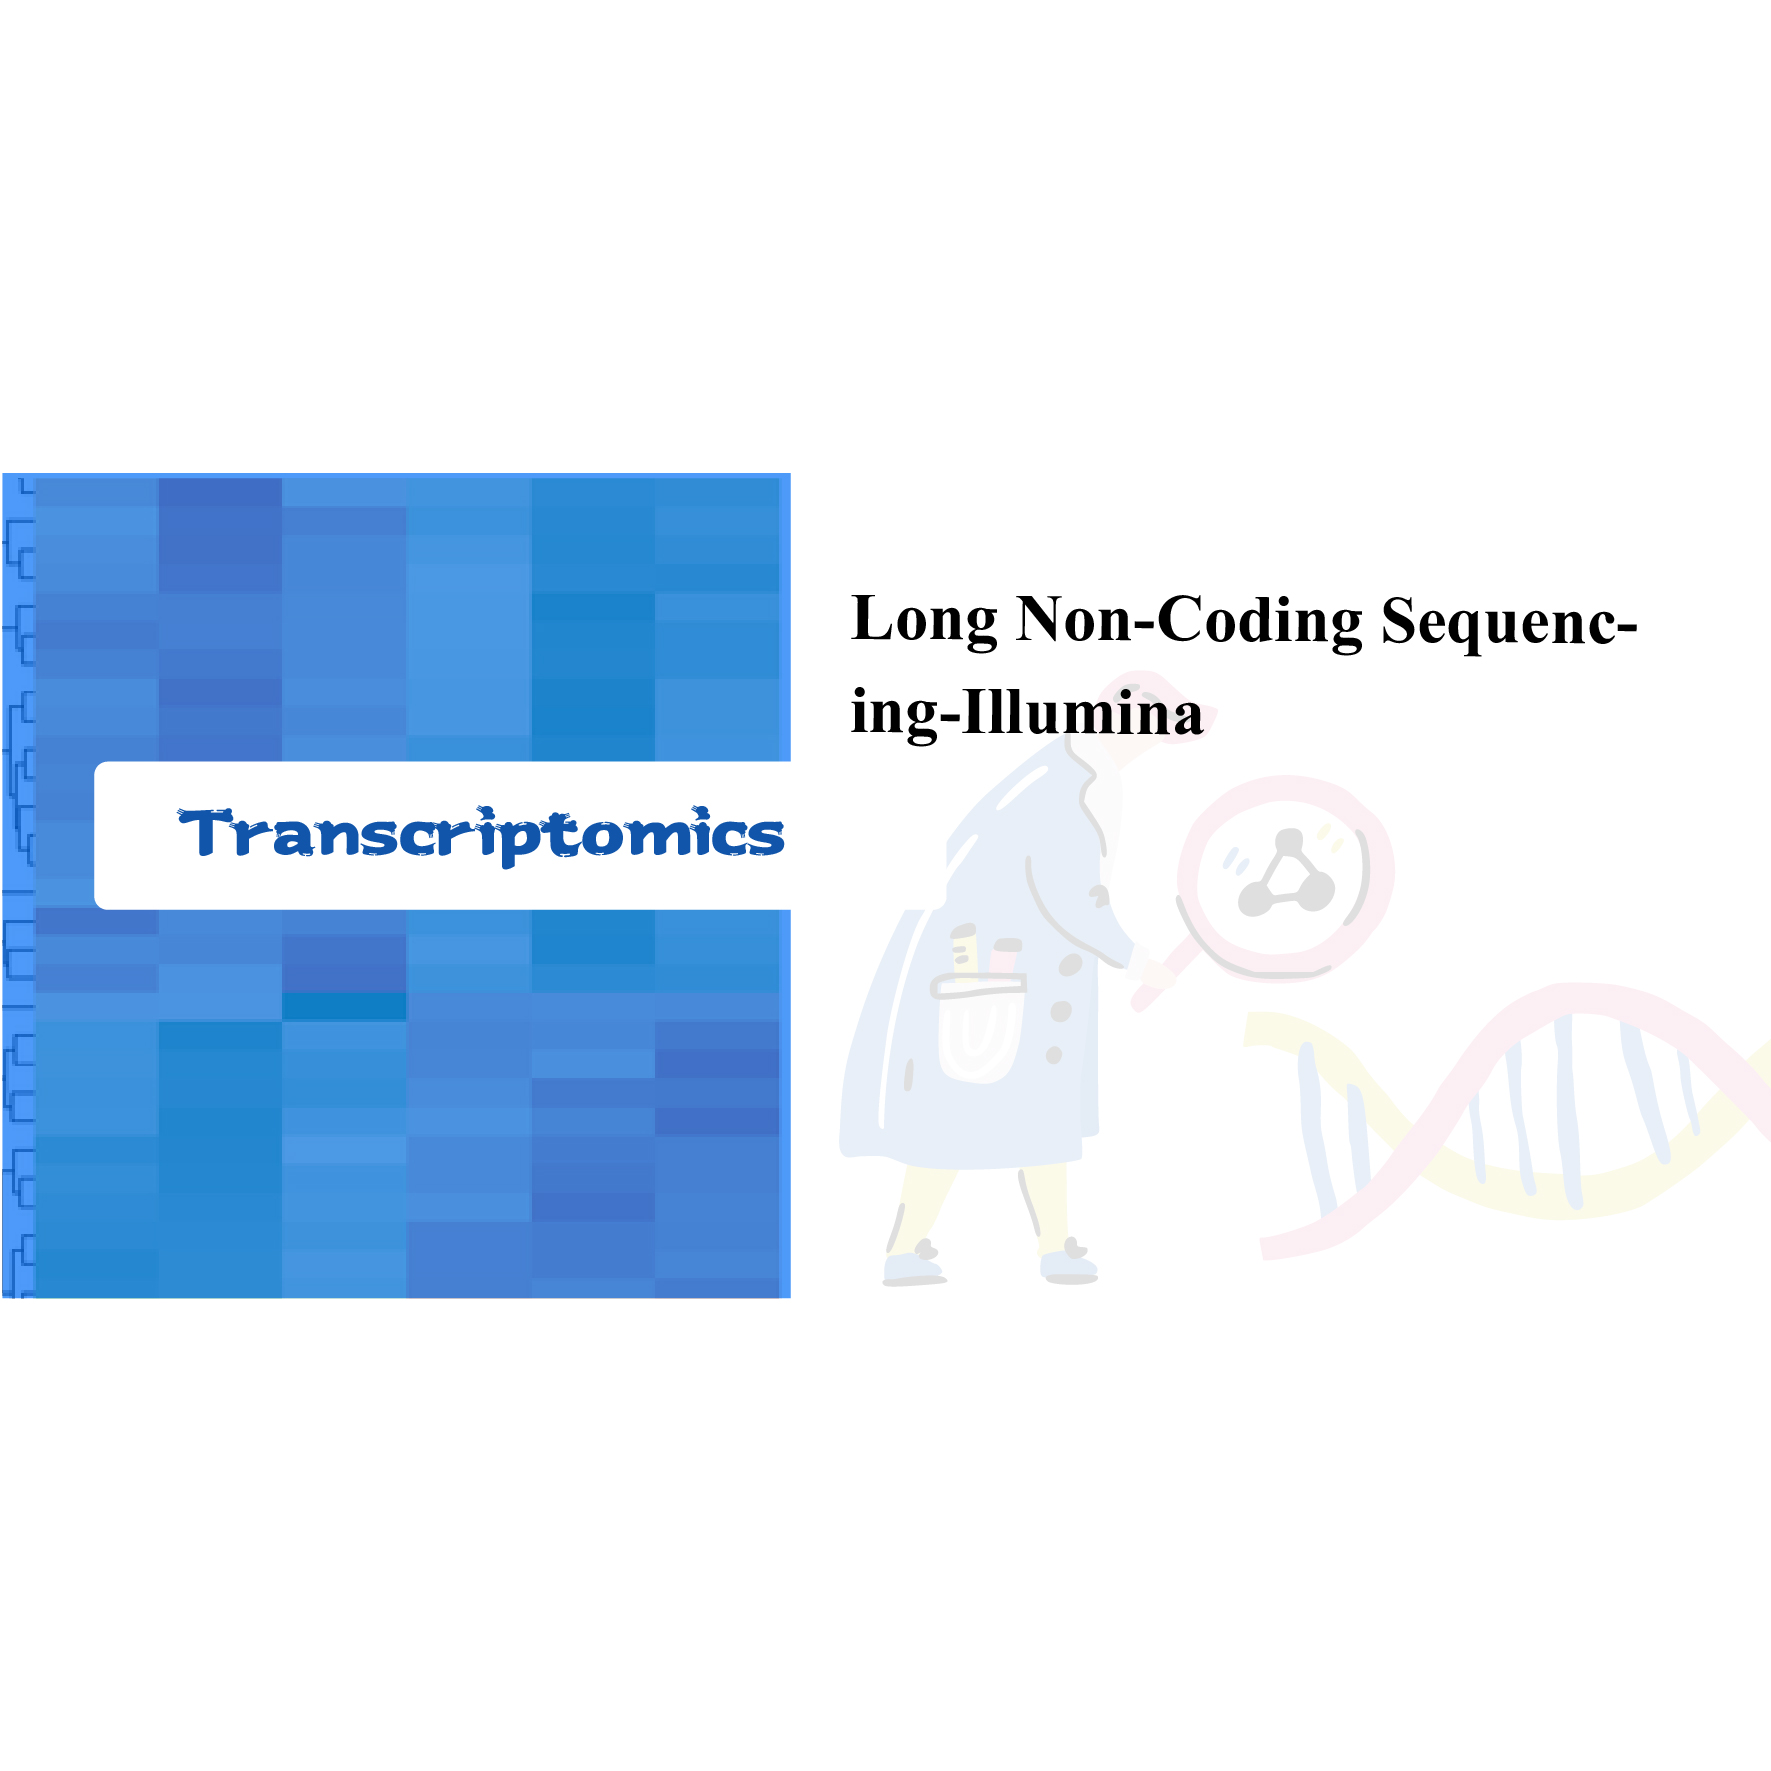 Lange net-kodearjen sequencing-Illumina